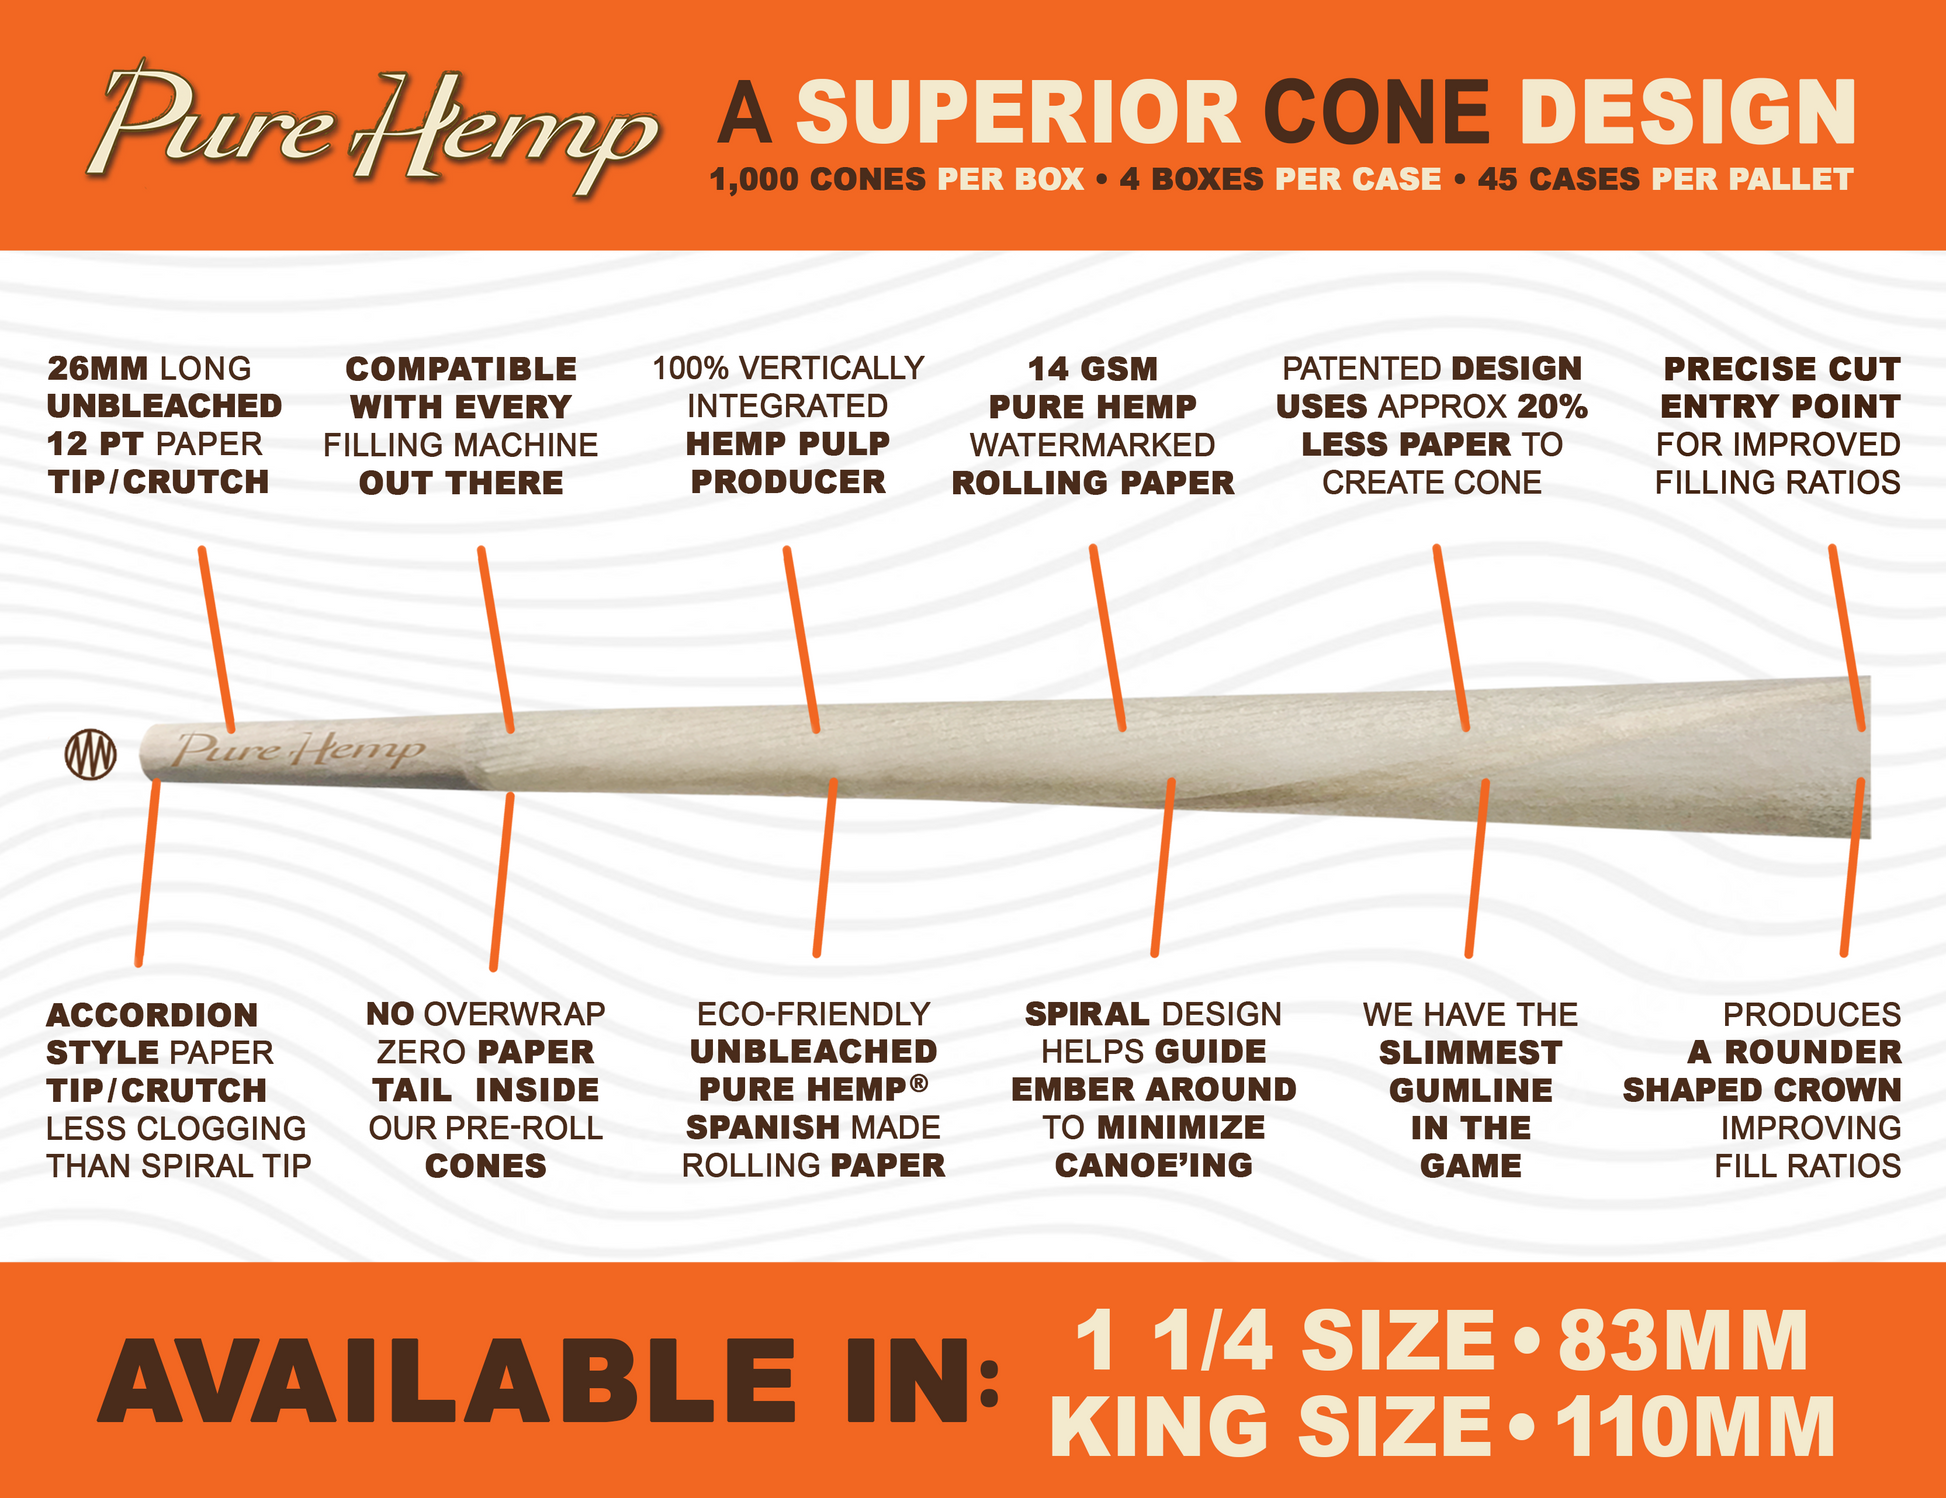 Our Pure Hemp Unbleached Cones Are Superior!